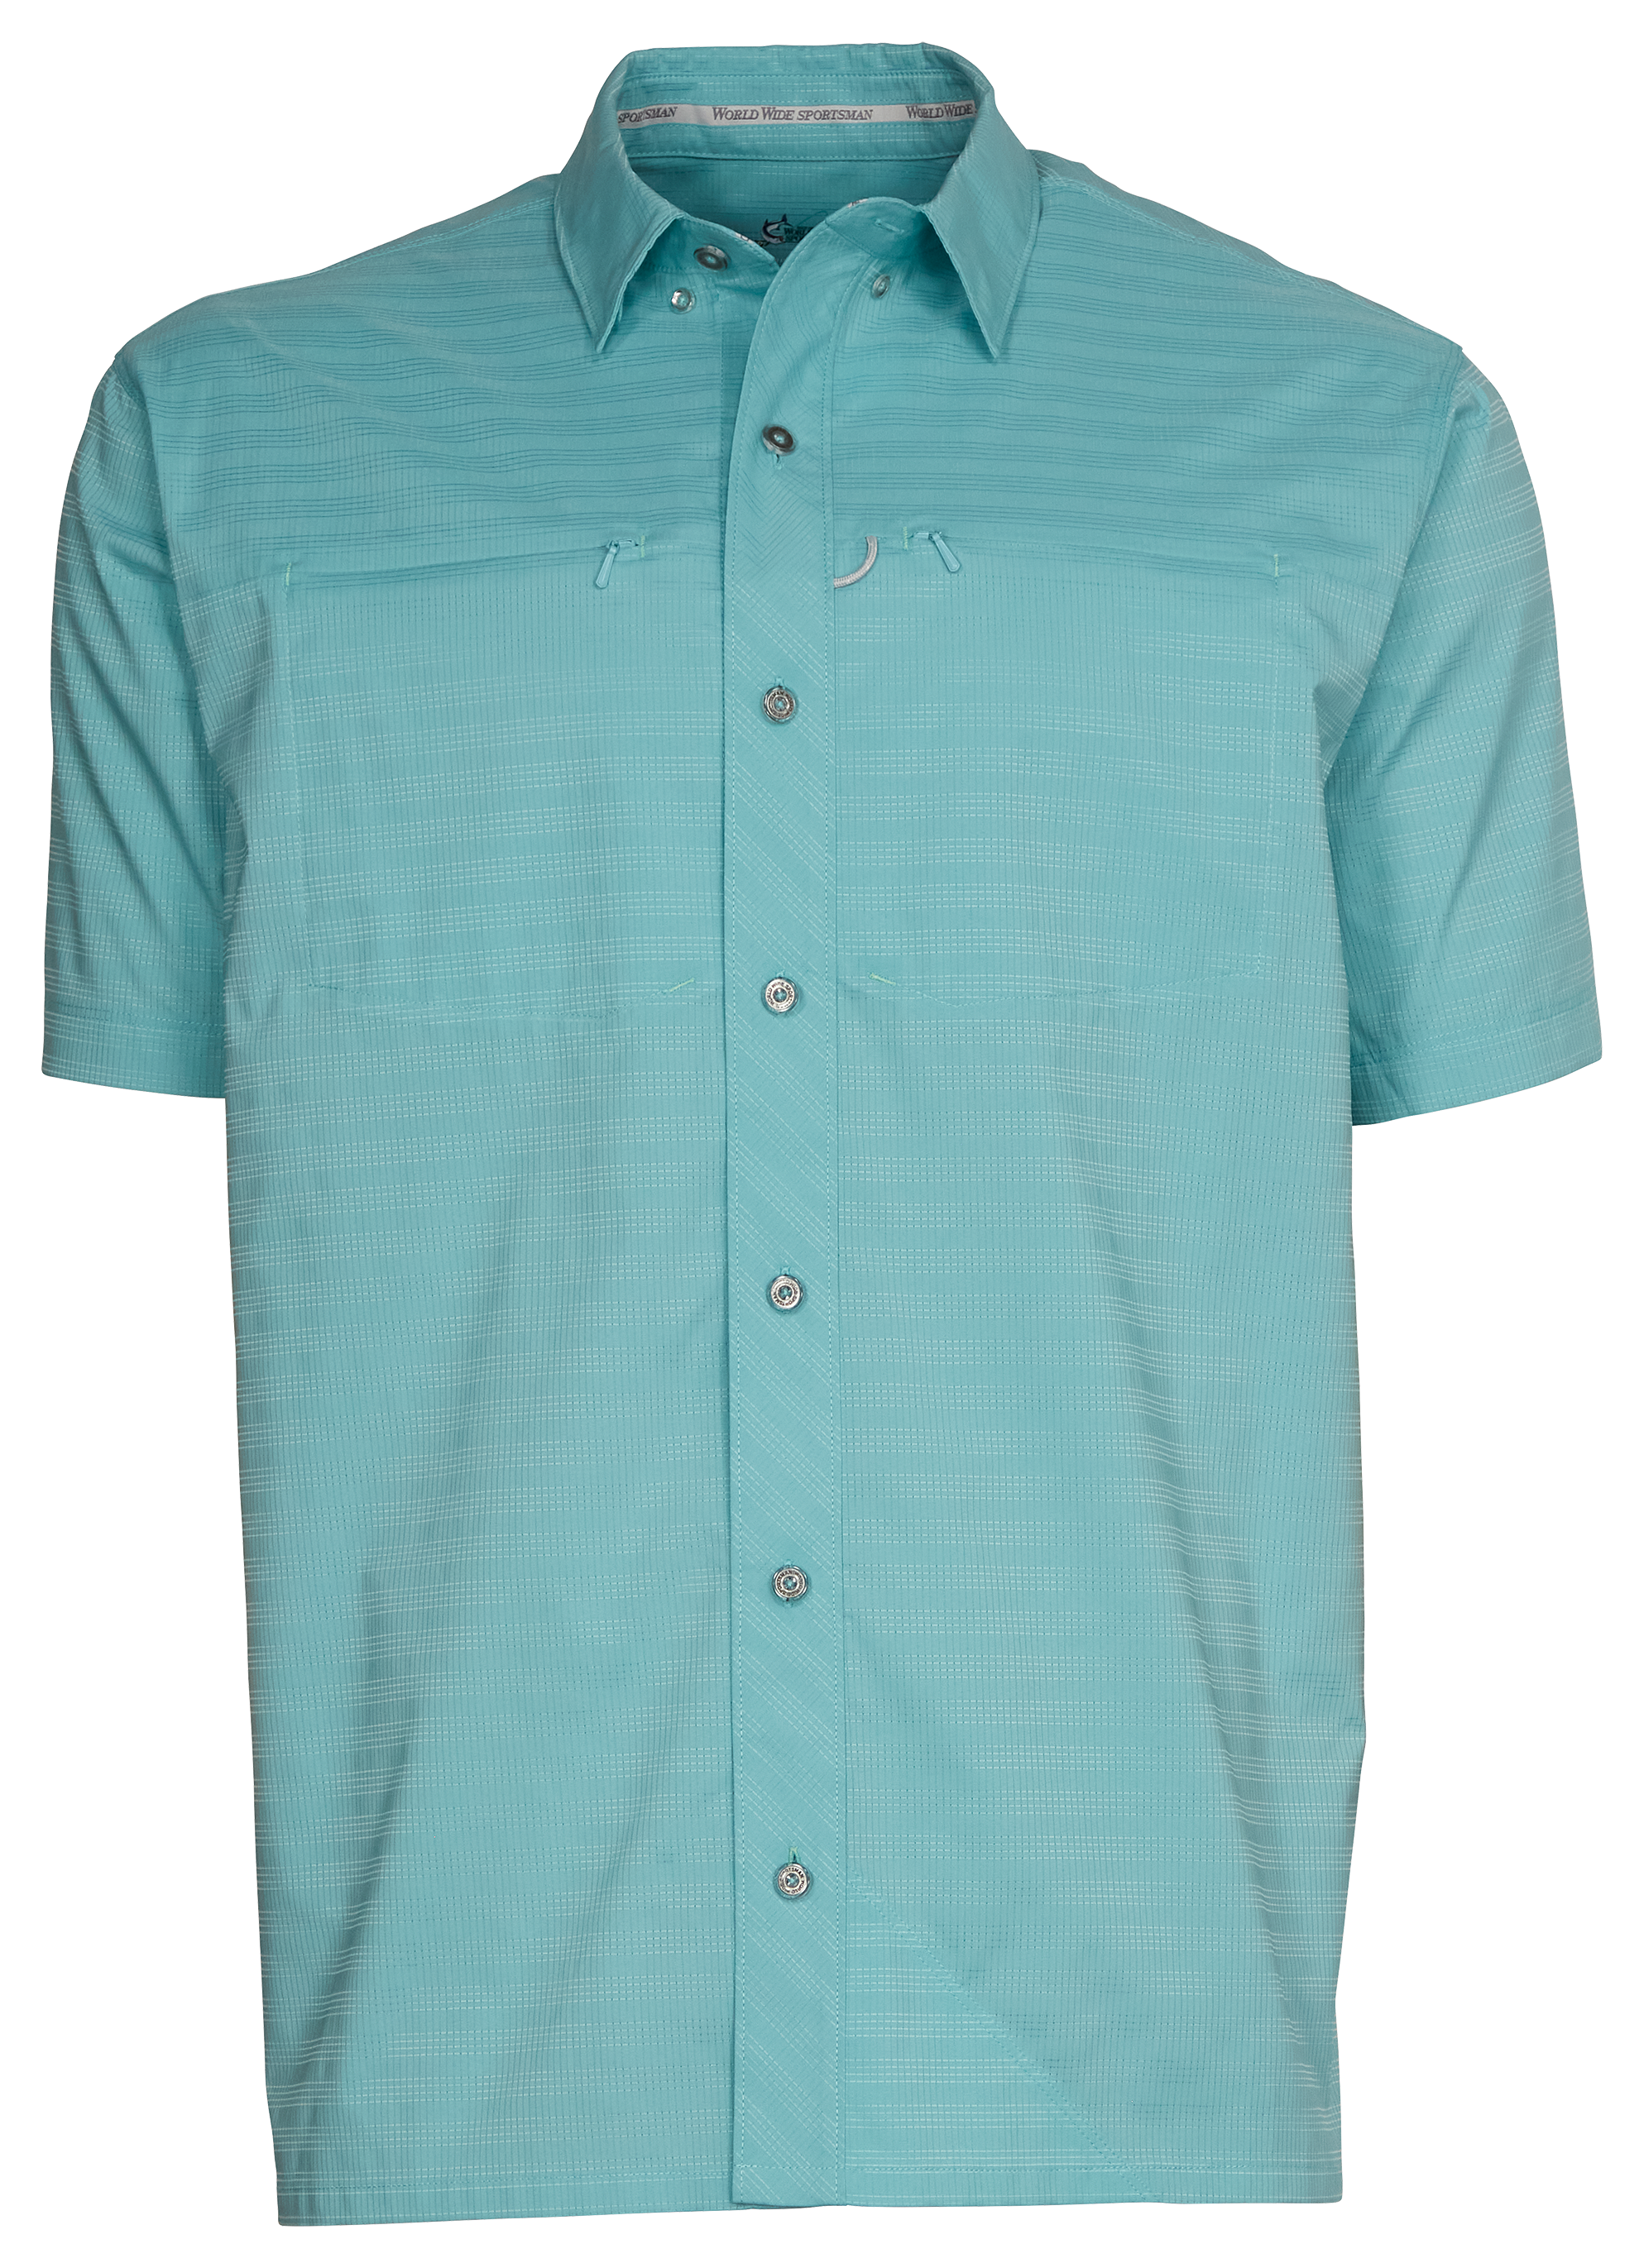 World Wide Sportsman Seacrest 2-Pocket Short-Sleeve Button-Down Shirt for Men - Reef Waters - 3XL